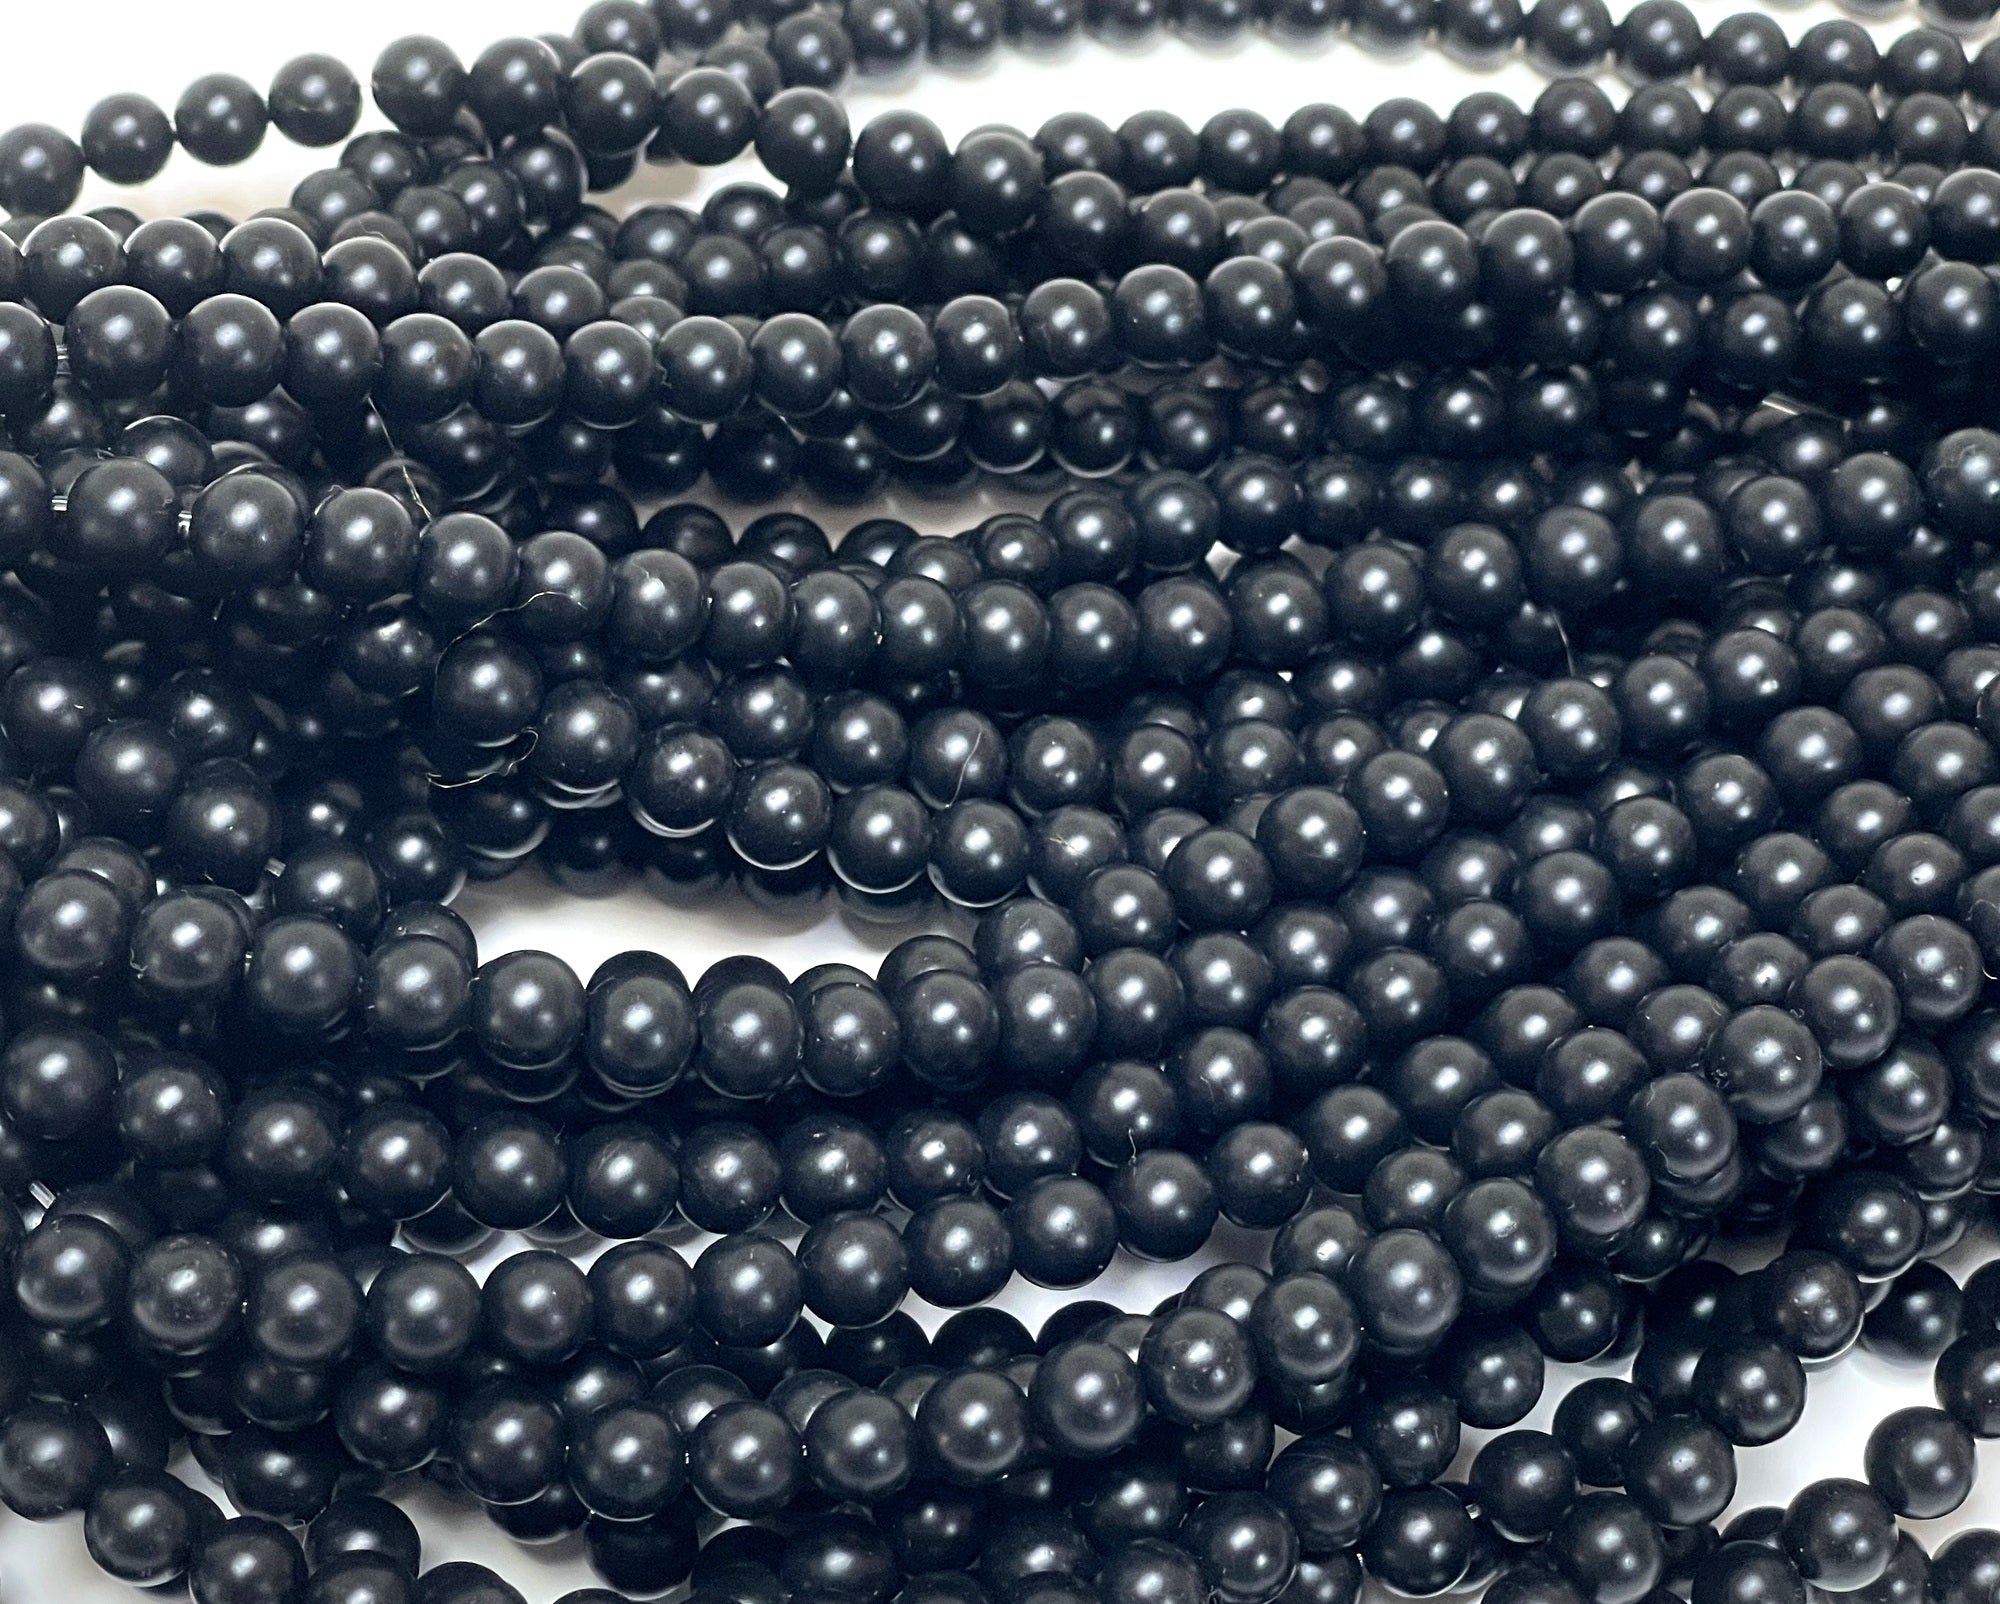 Black Onyx matte oiled 6mm round gemstone beads 16" strand